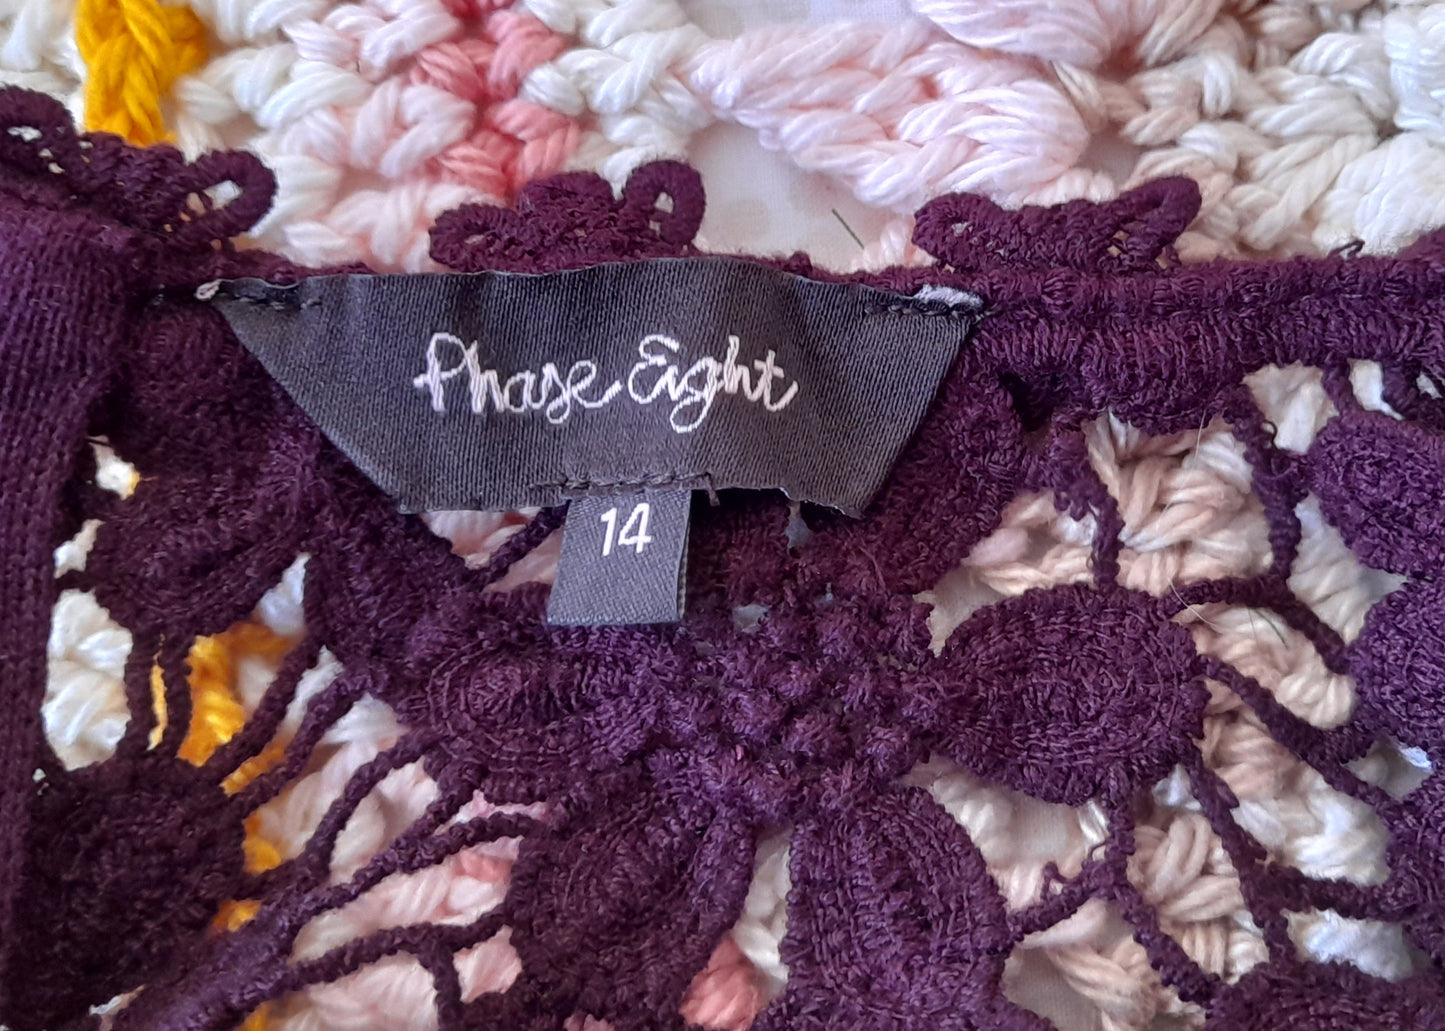 Dress - Phase Eight Lace & Knit Size 14